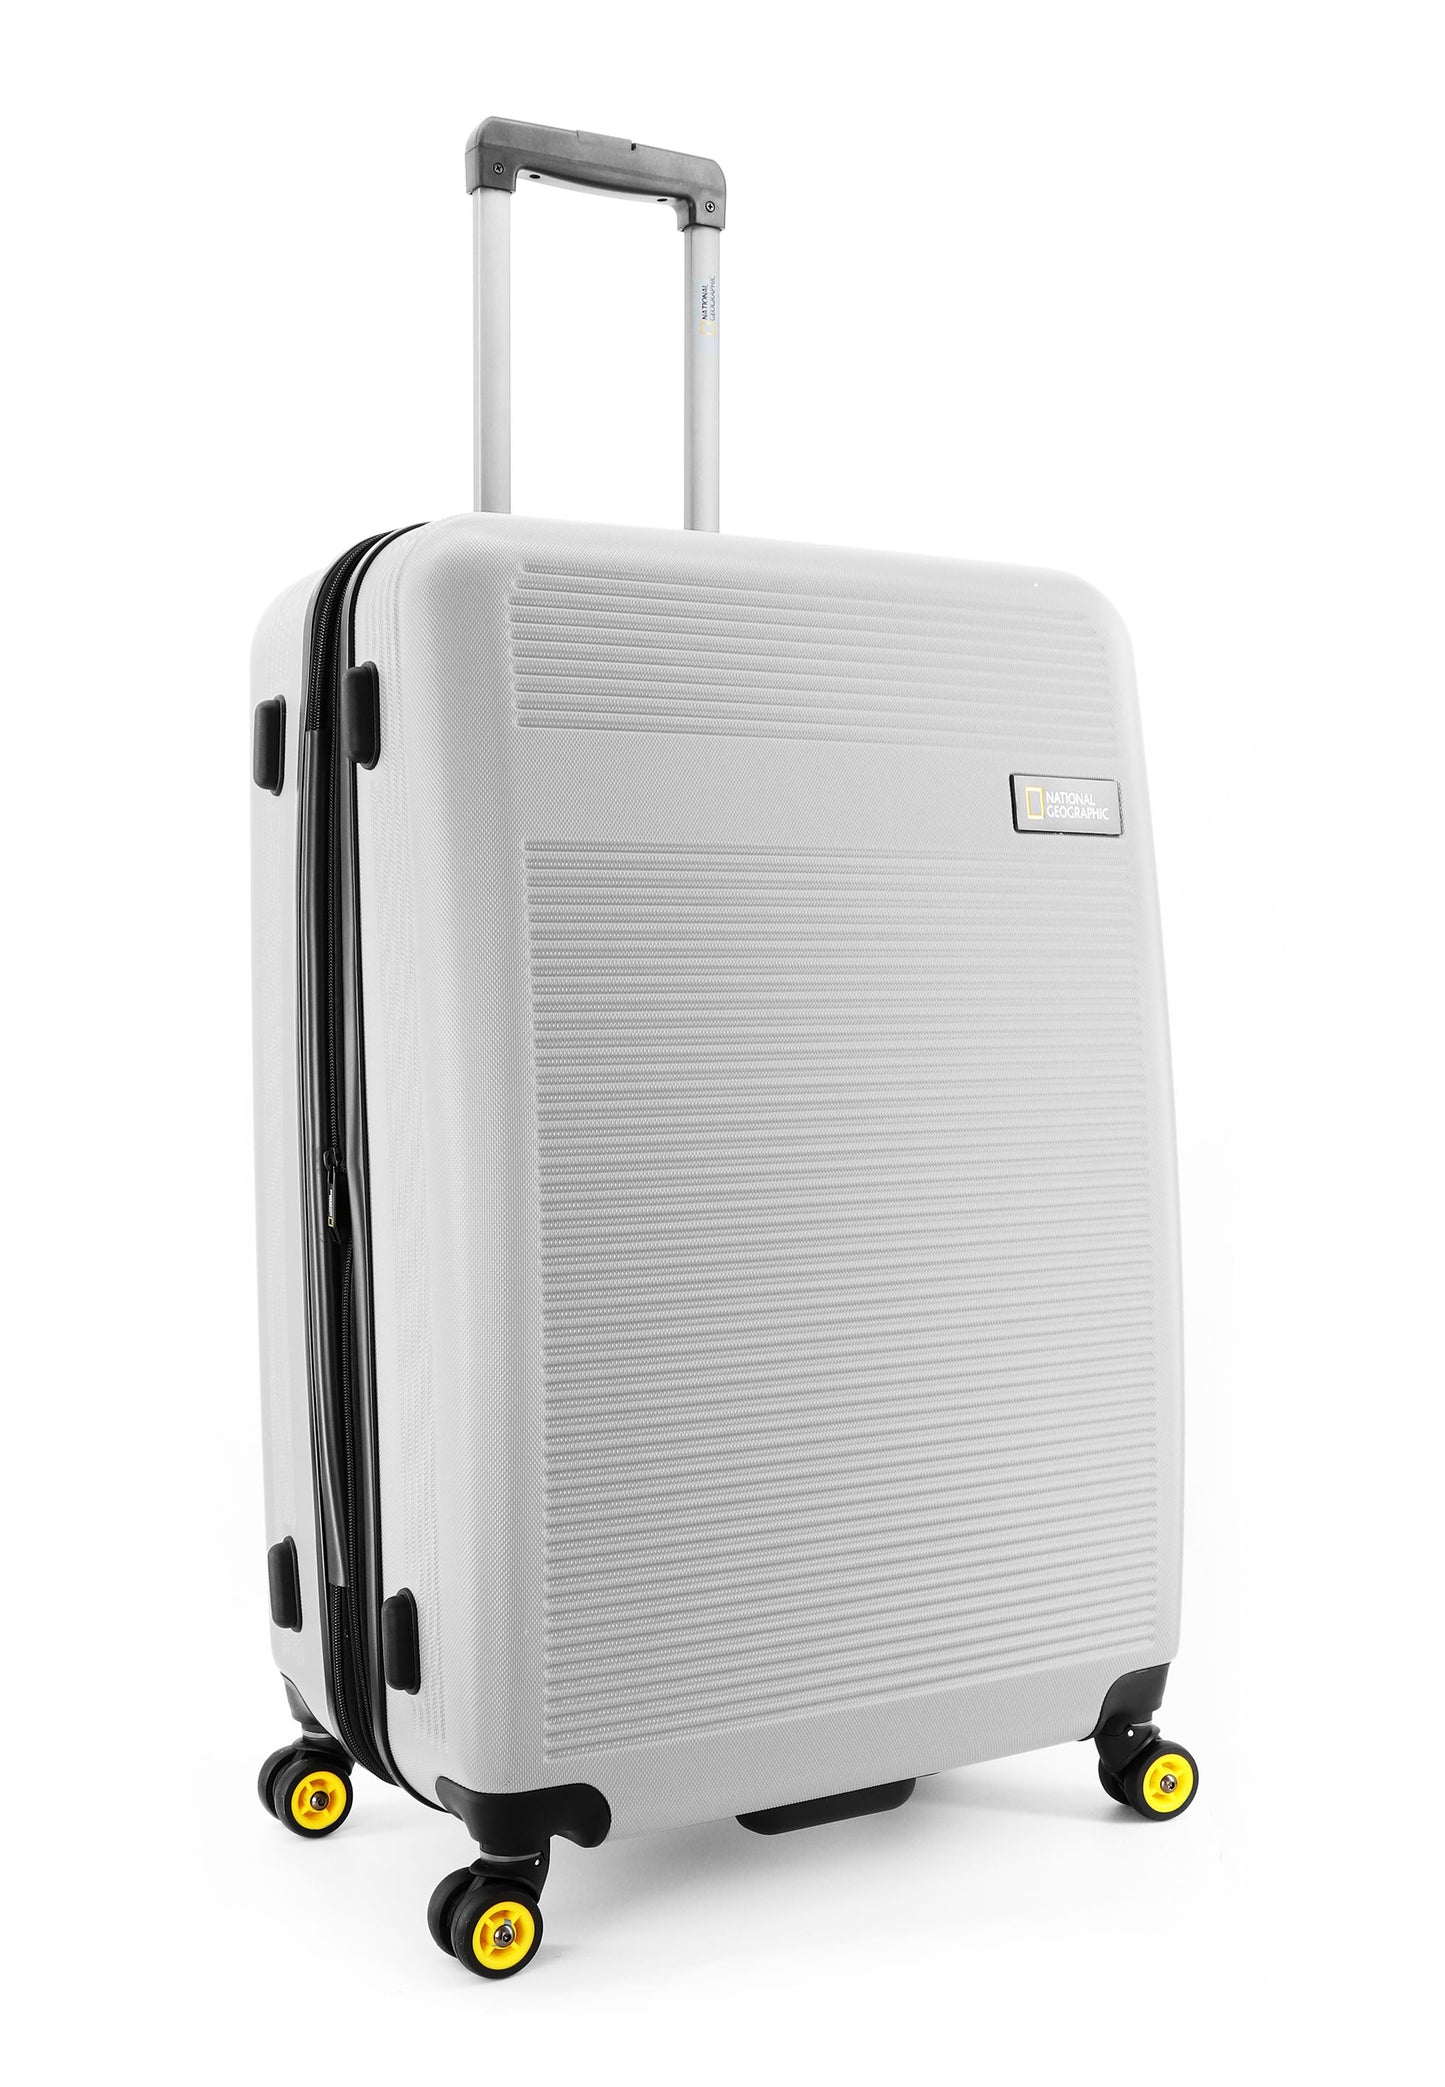 National Geographic Hard Case / Trolley / Travel Case - 76 cm (Large) - Aerodrome - Argent